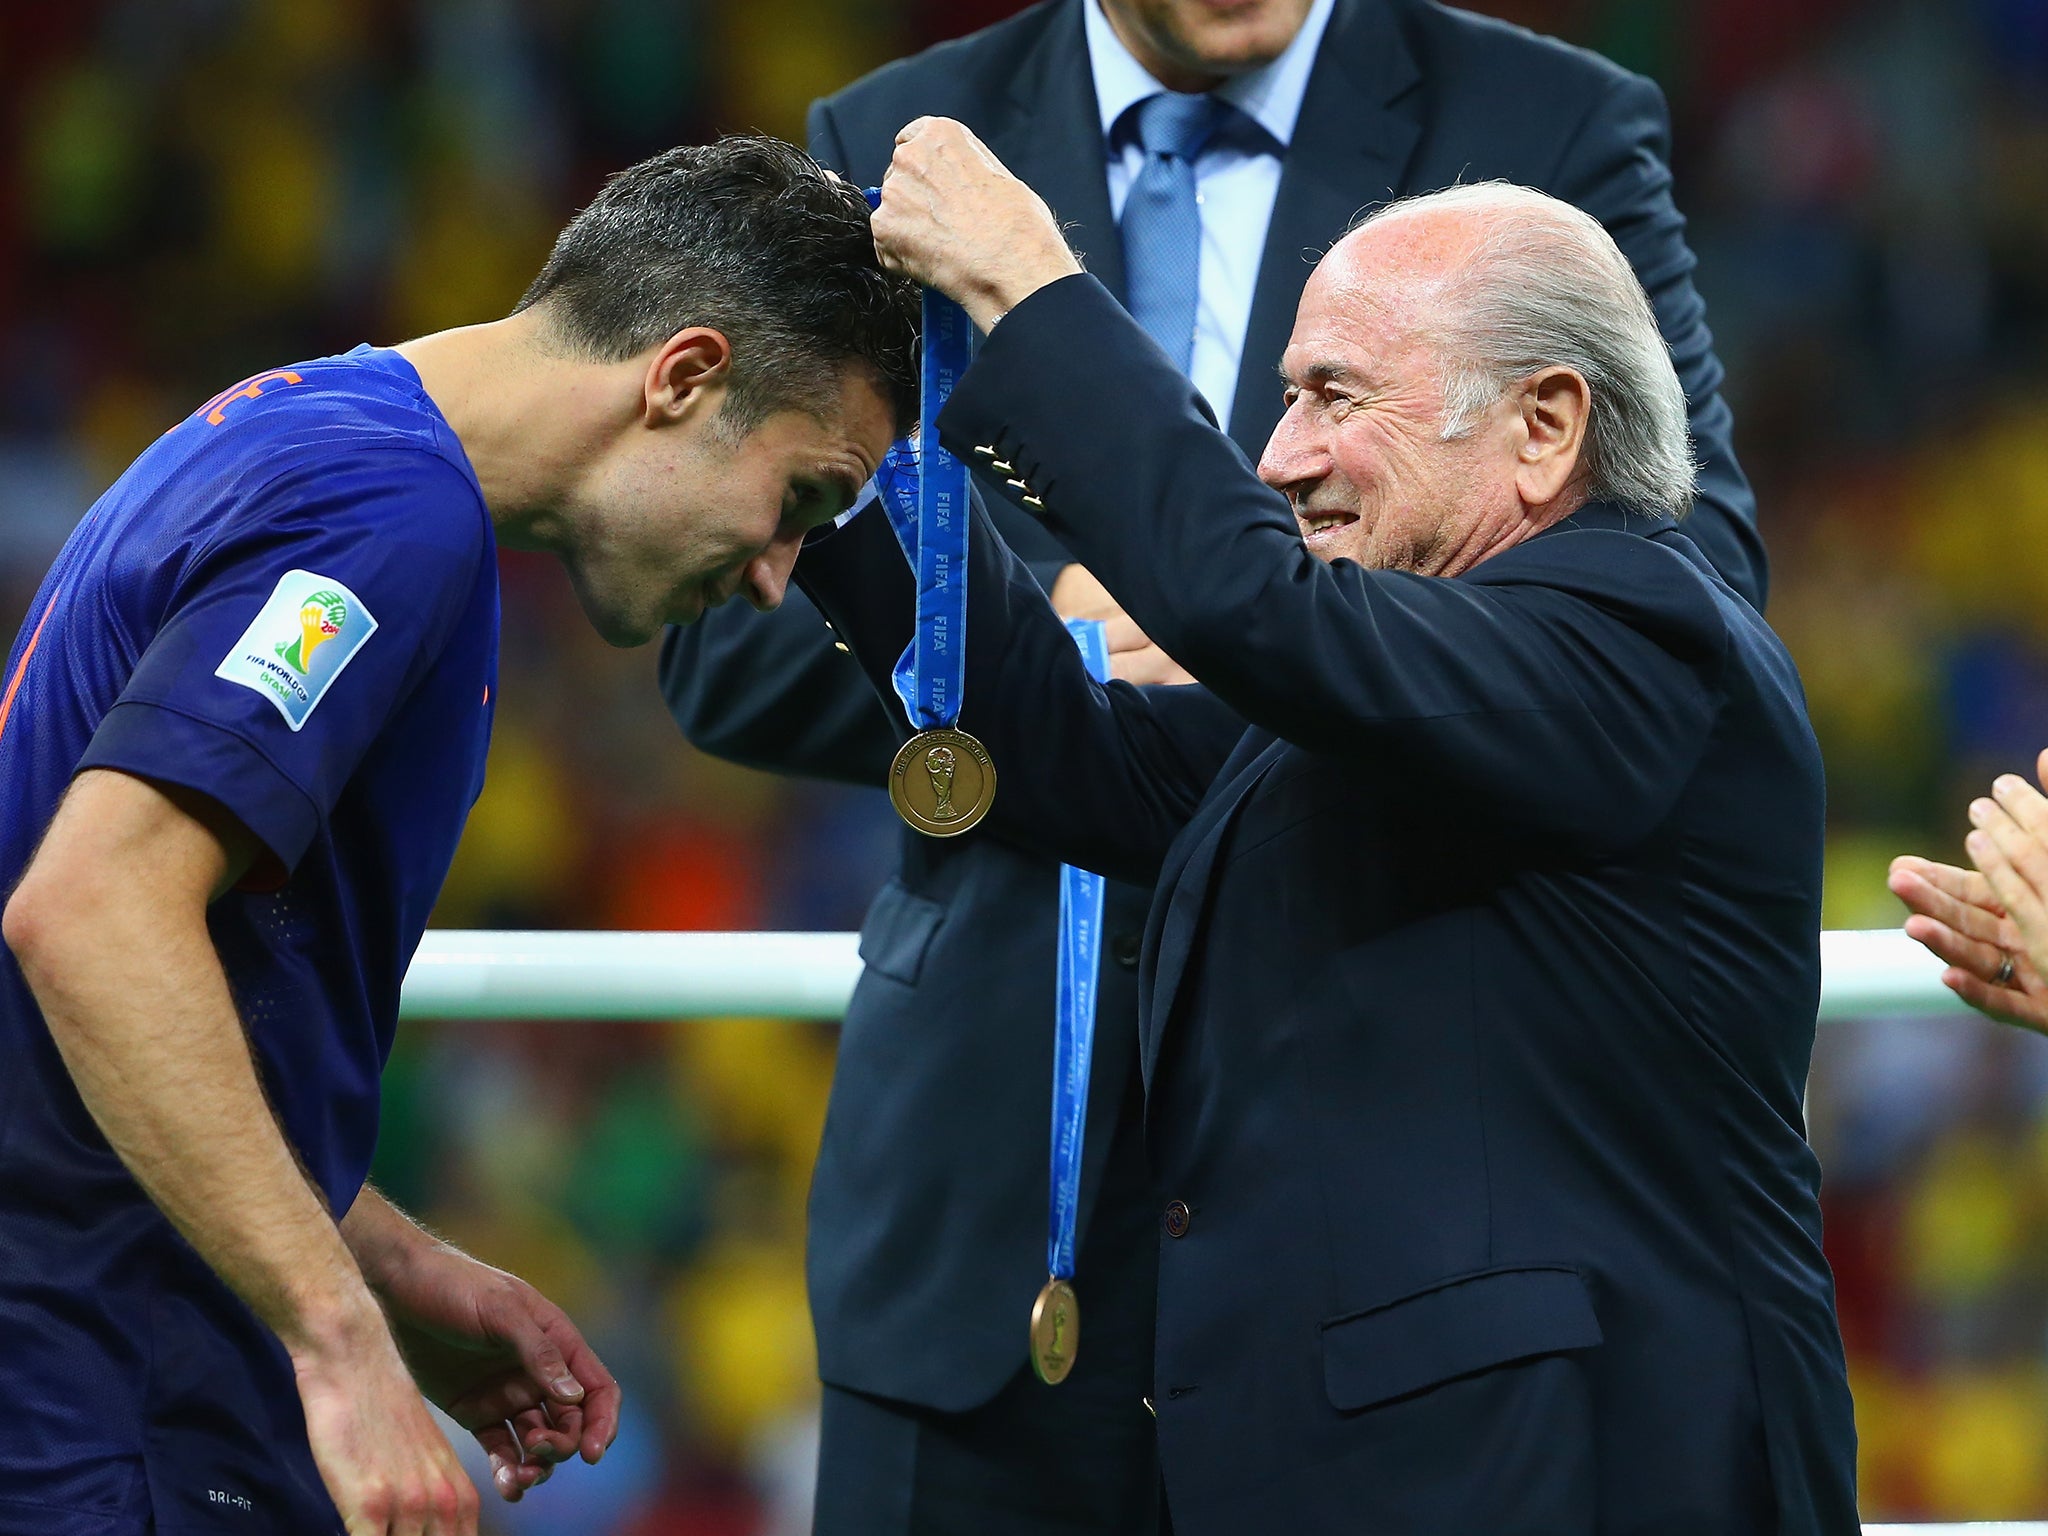 Van Persie is handed his third-place medal by Fifa president Sepp Blatter